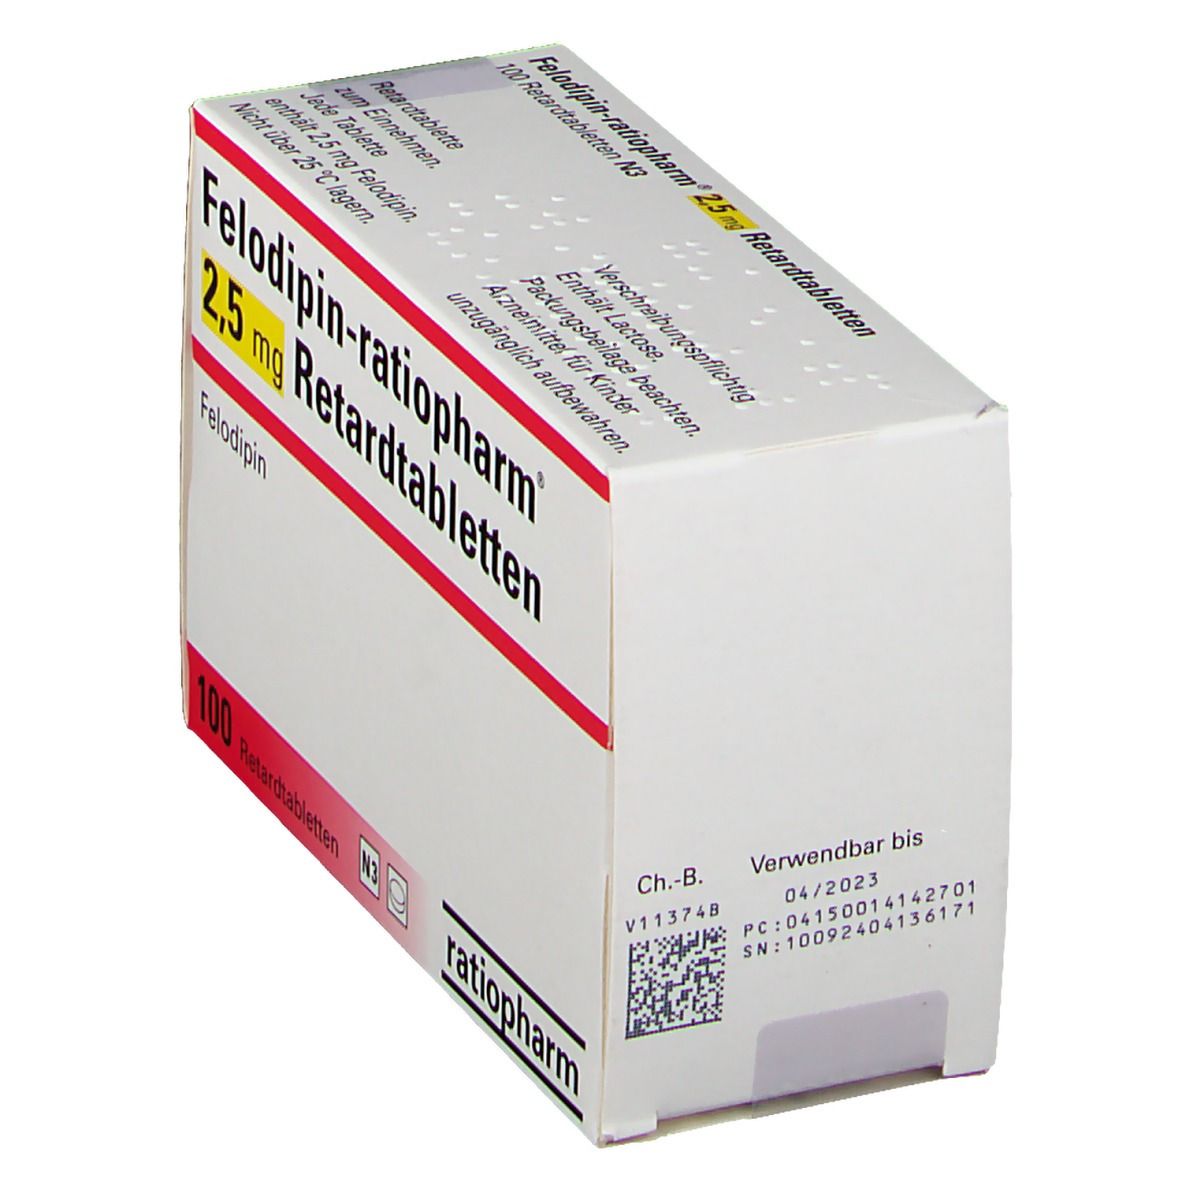 Felodipin-ratiopharm® 2,5 mg